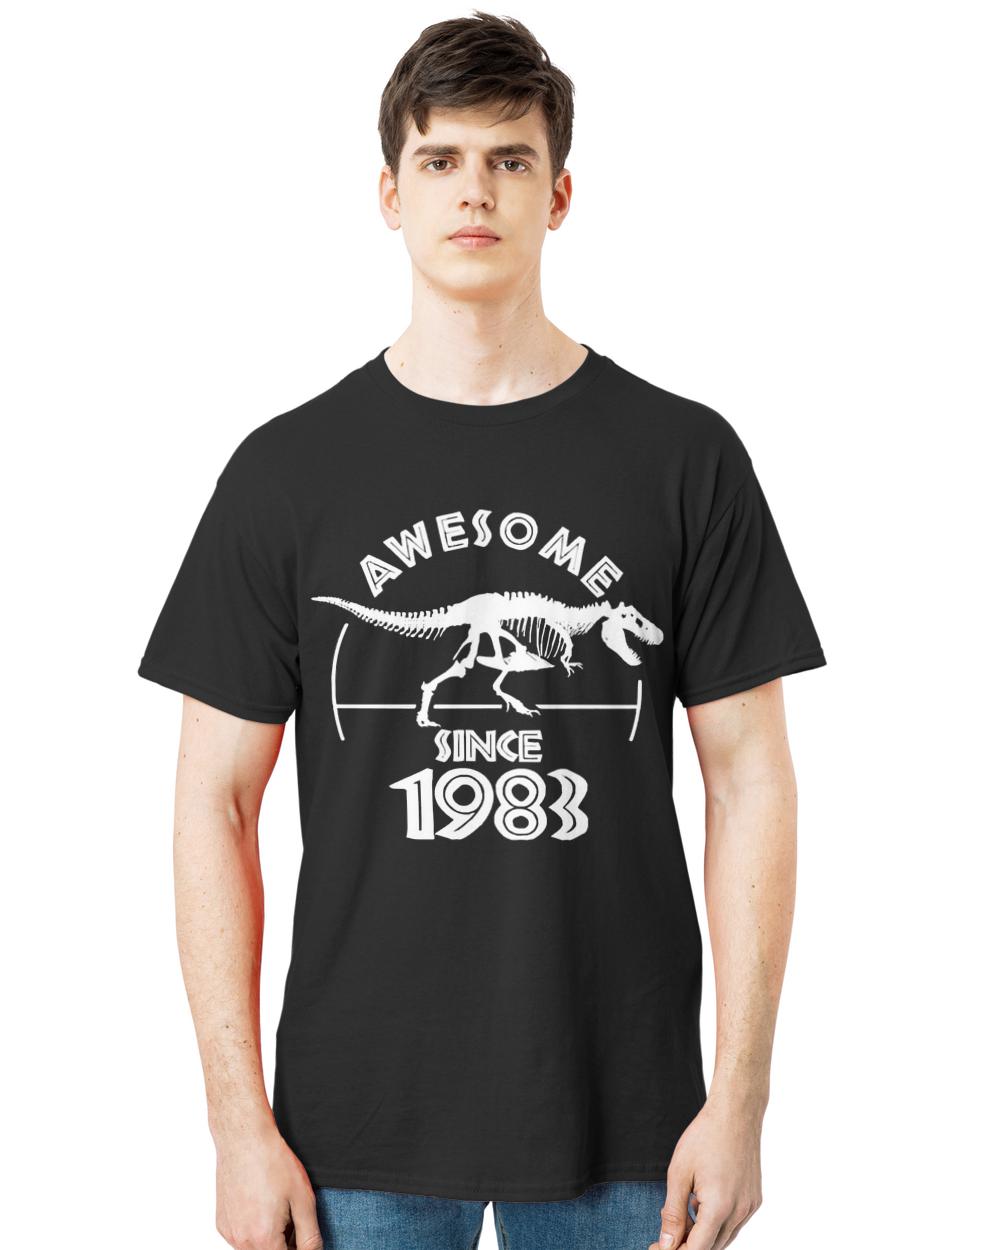 1983 Birthday T-ShirtAwesome Since 1983 T-Shirt